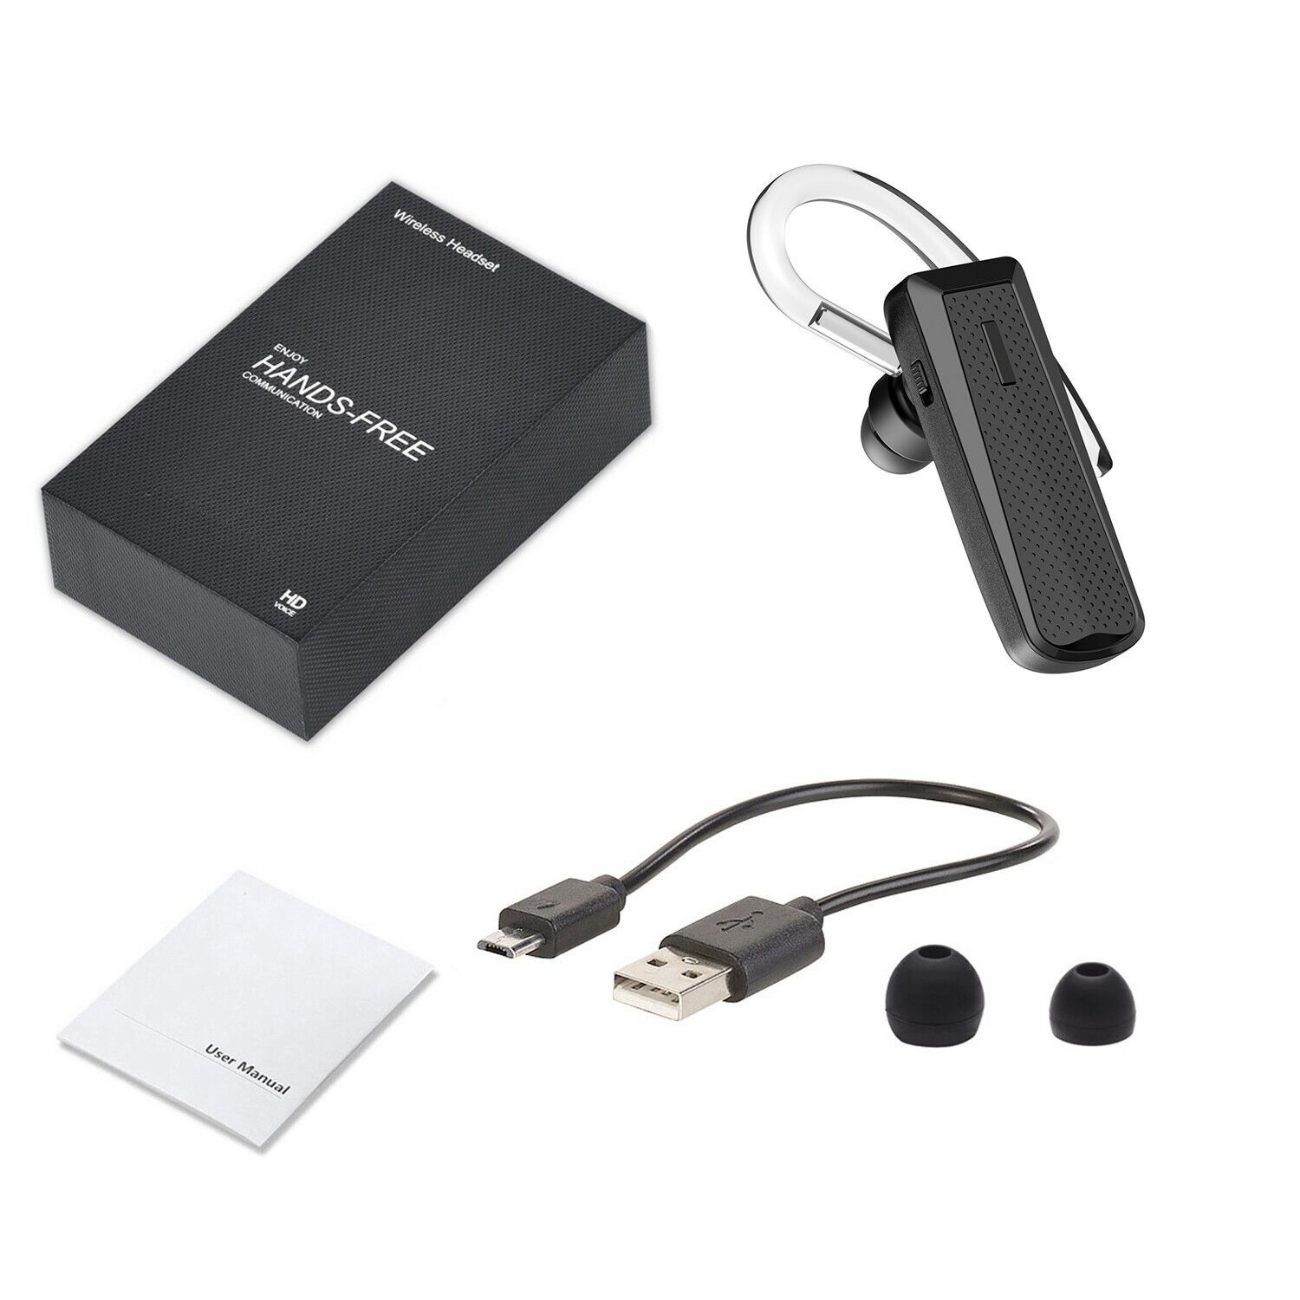 HAPPYSET Short, In-ear Bluetooth Schwarz Bluetooth Headset